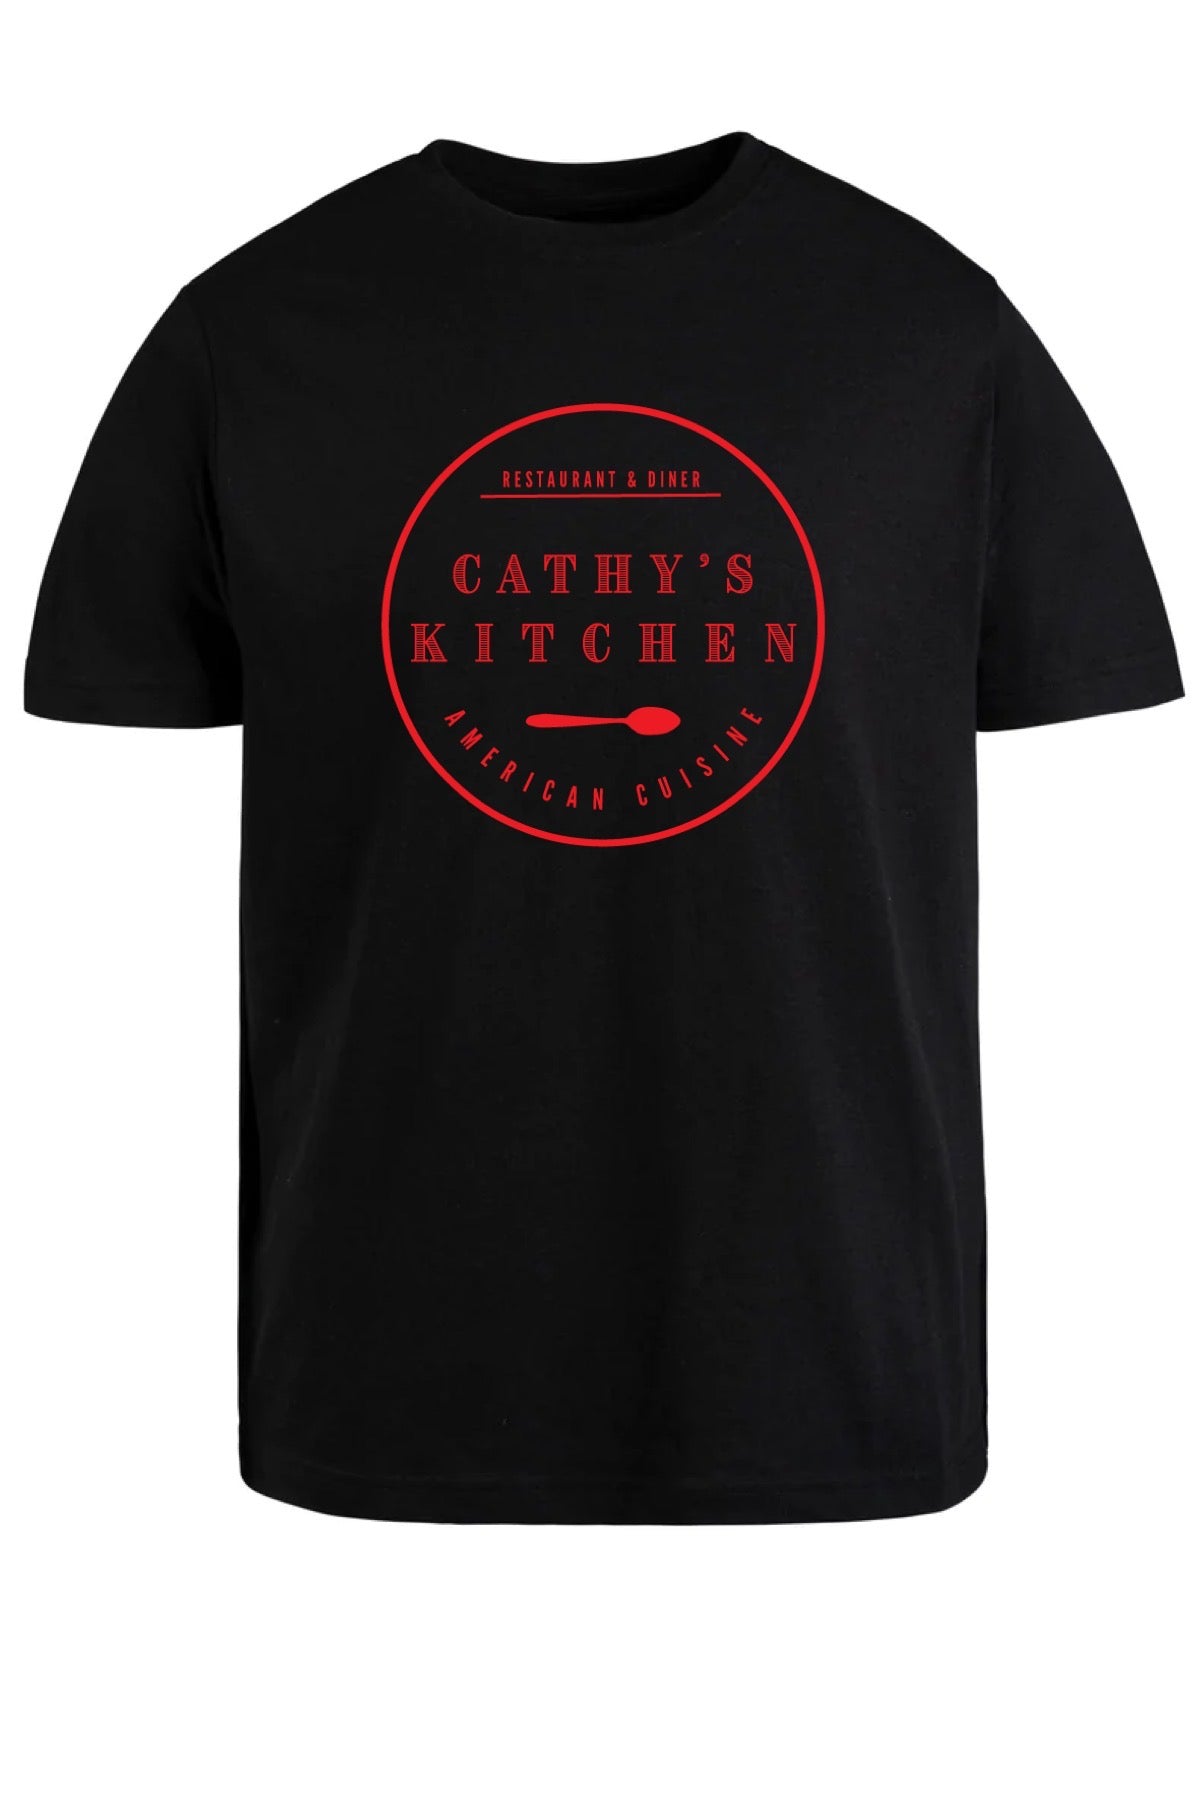 Cathy's Kitchen Black T-Shirt